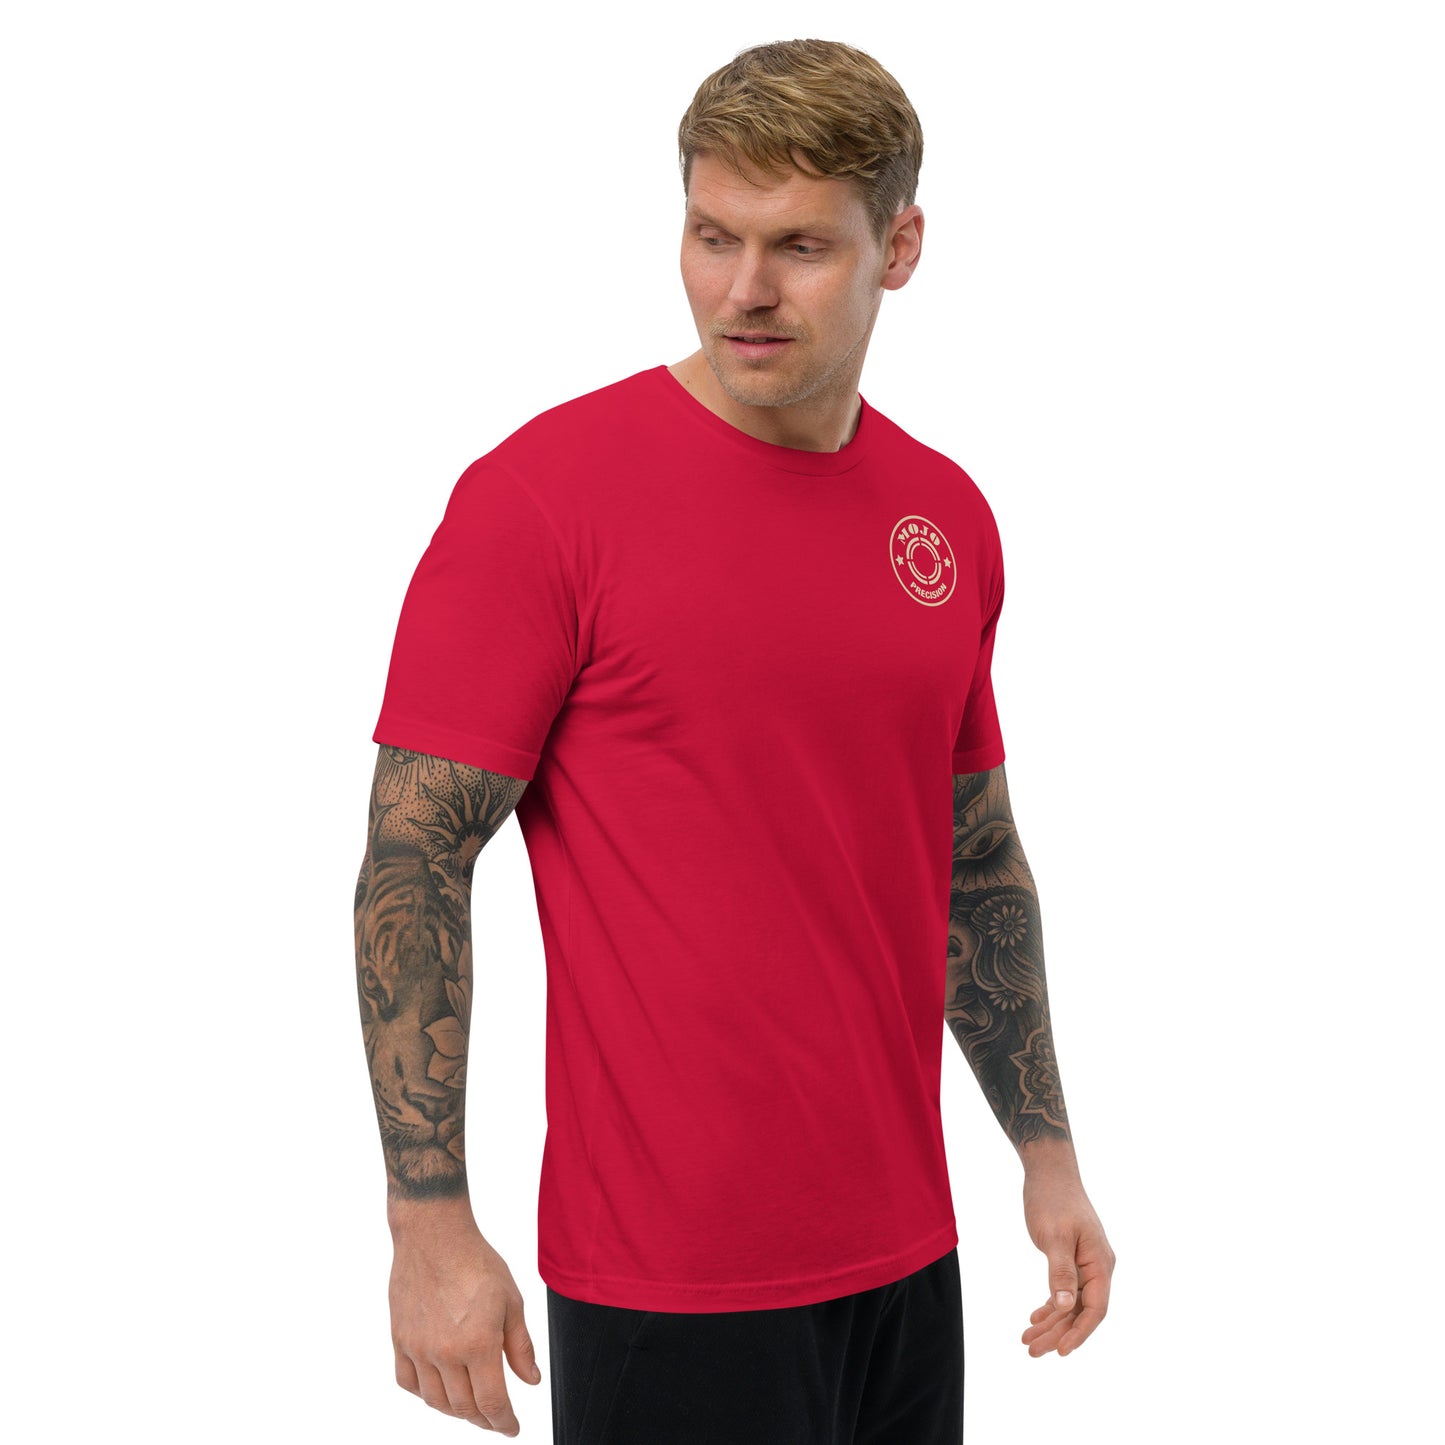 Lumber Jack Short Sleeve T-shirt